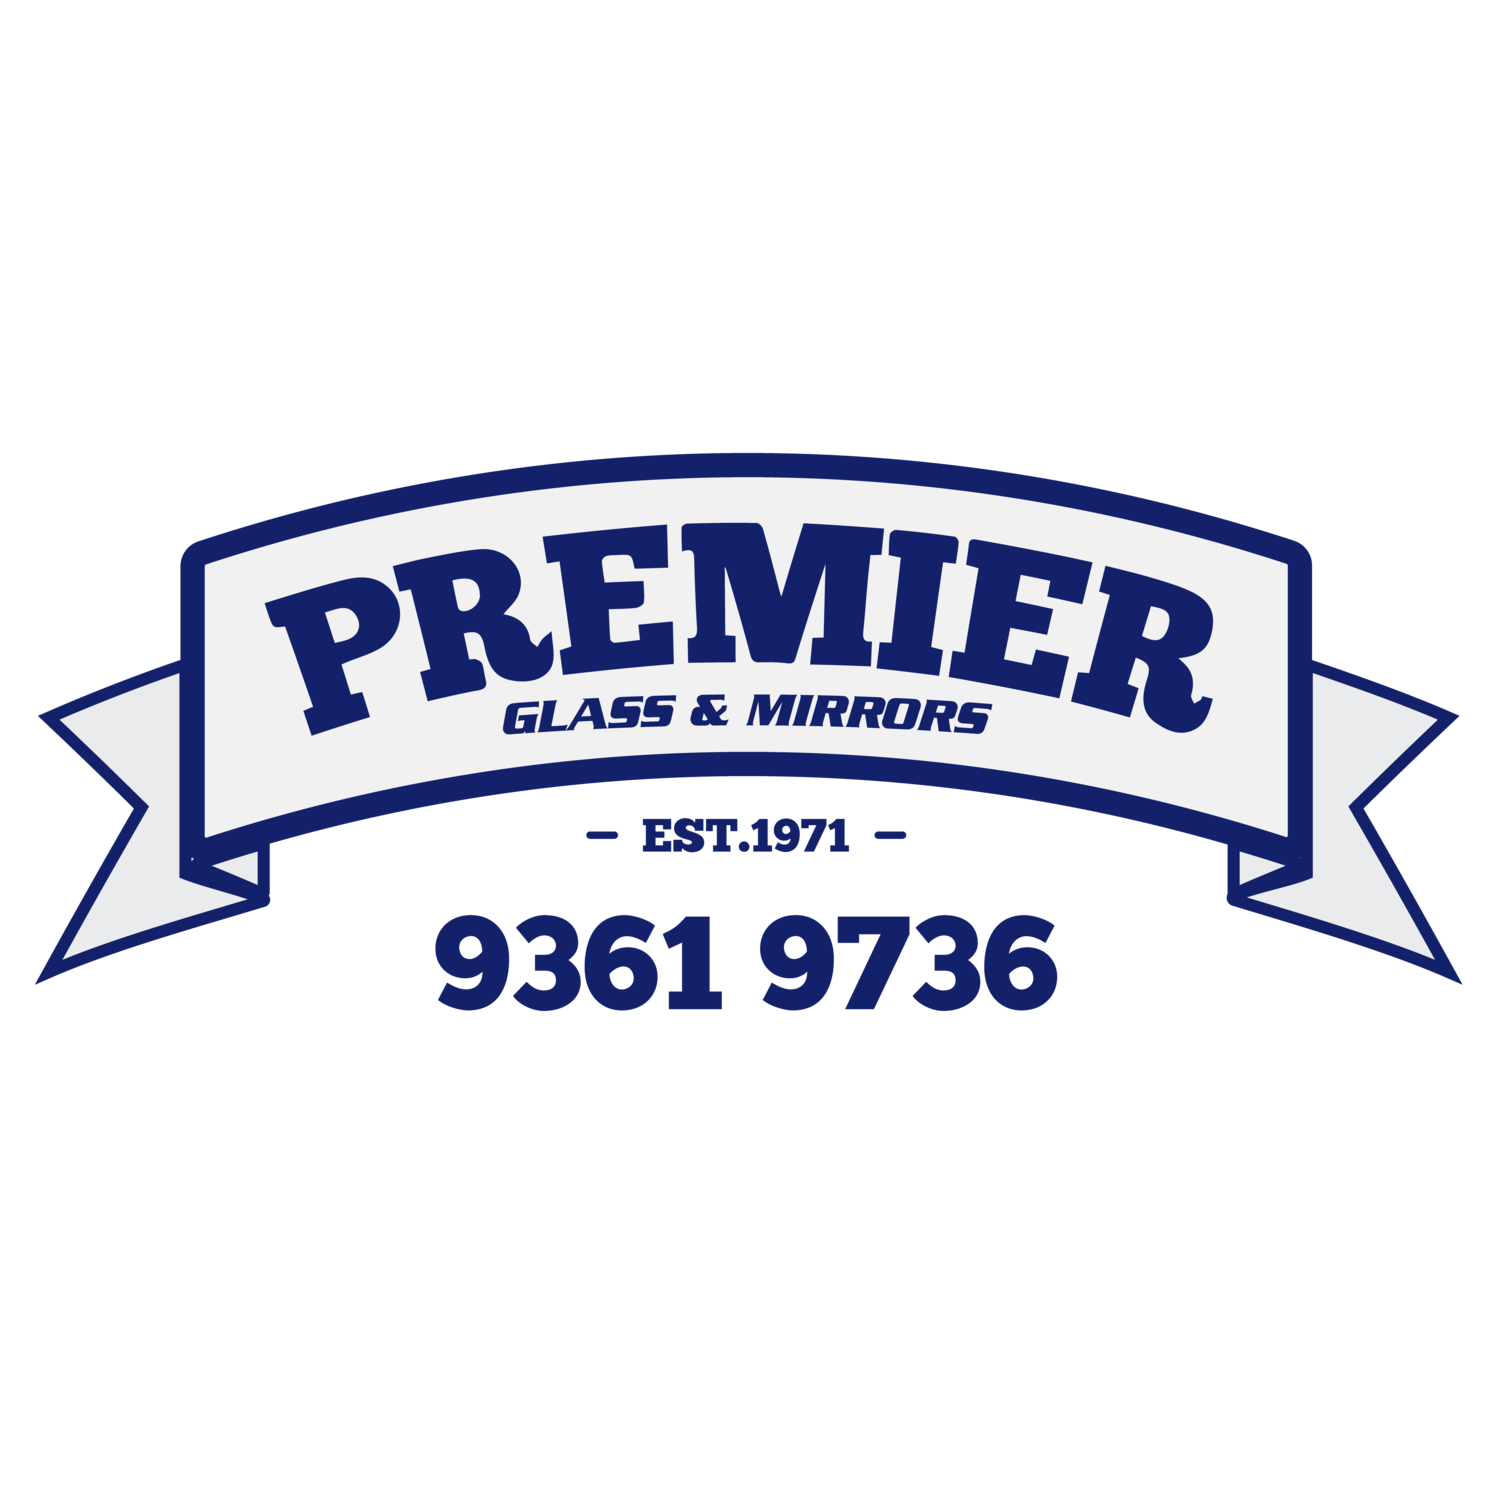 Premier Glass & Mirrors | Emergency Glass Repairs